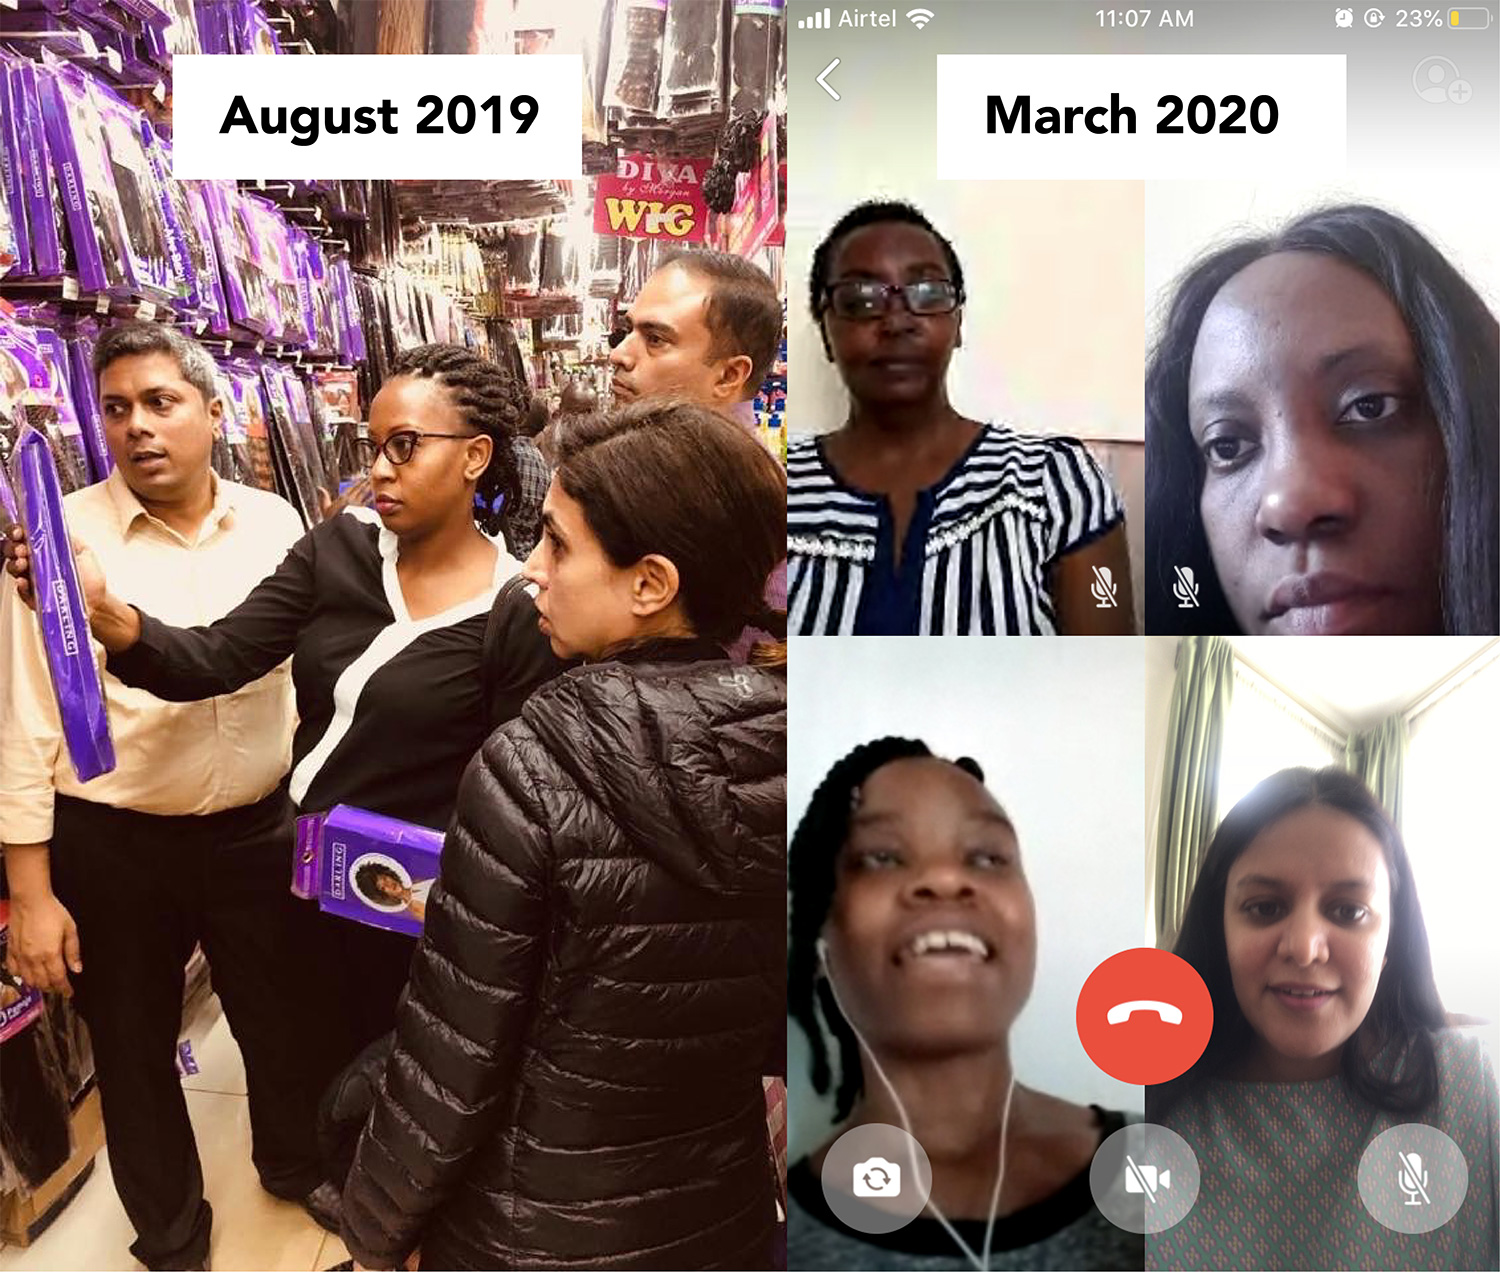 Our Africa team hosts consumer conversations online